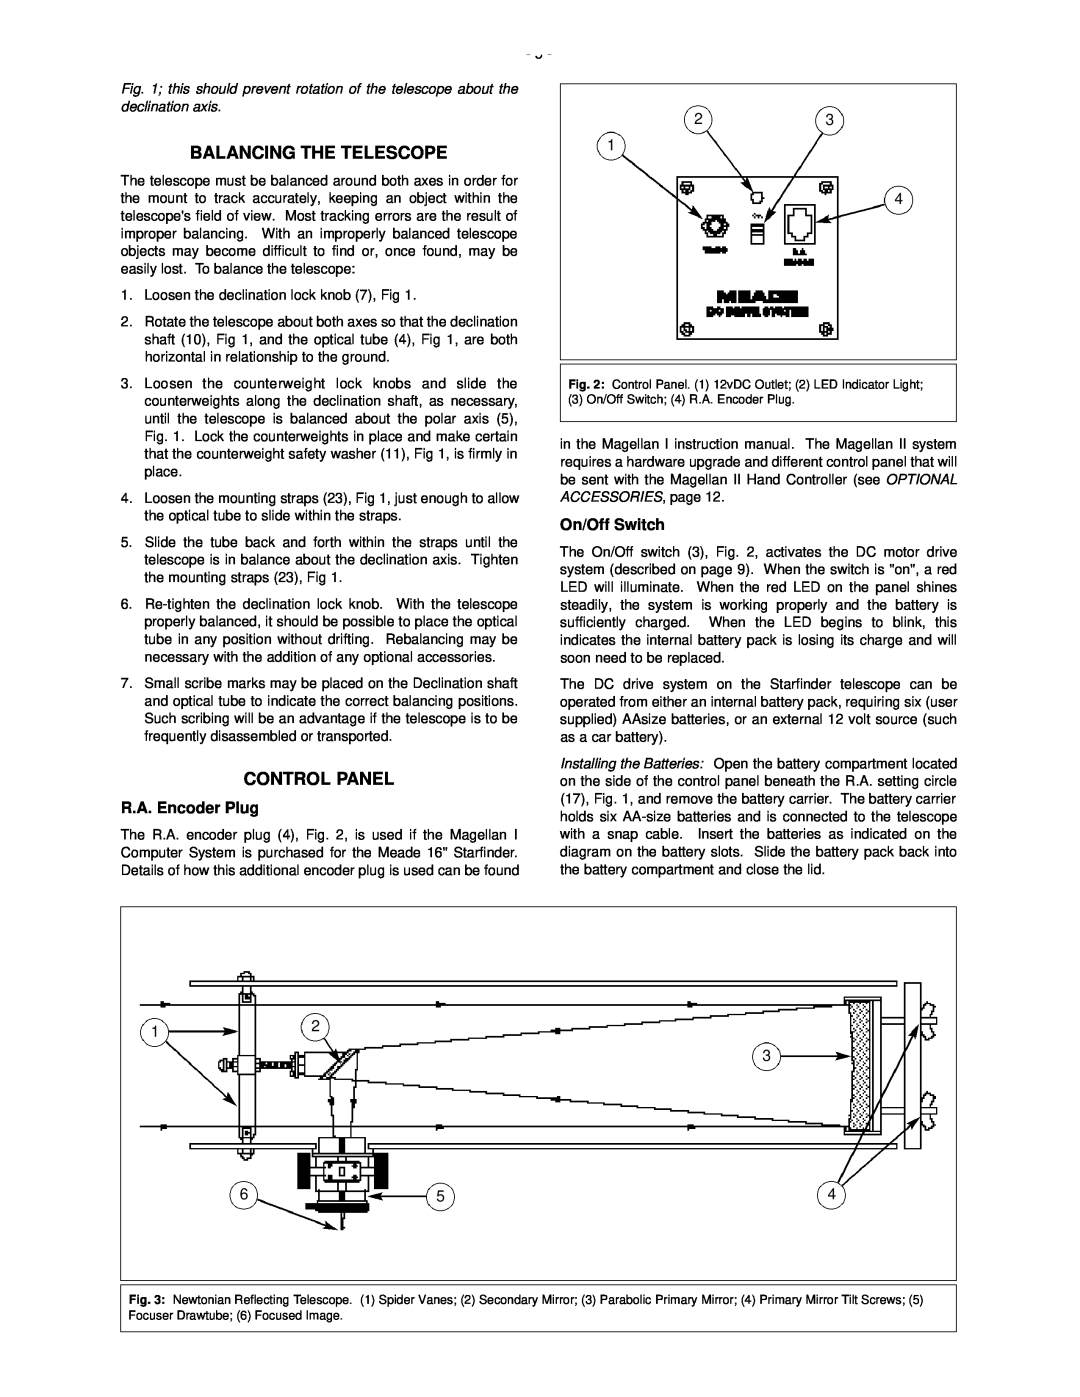 Meade 50 AZ-T instruction manual Balancing The Telescope, Control Panel, R.A. Encoder Plug, On/Off Switch 